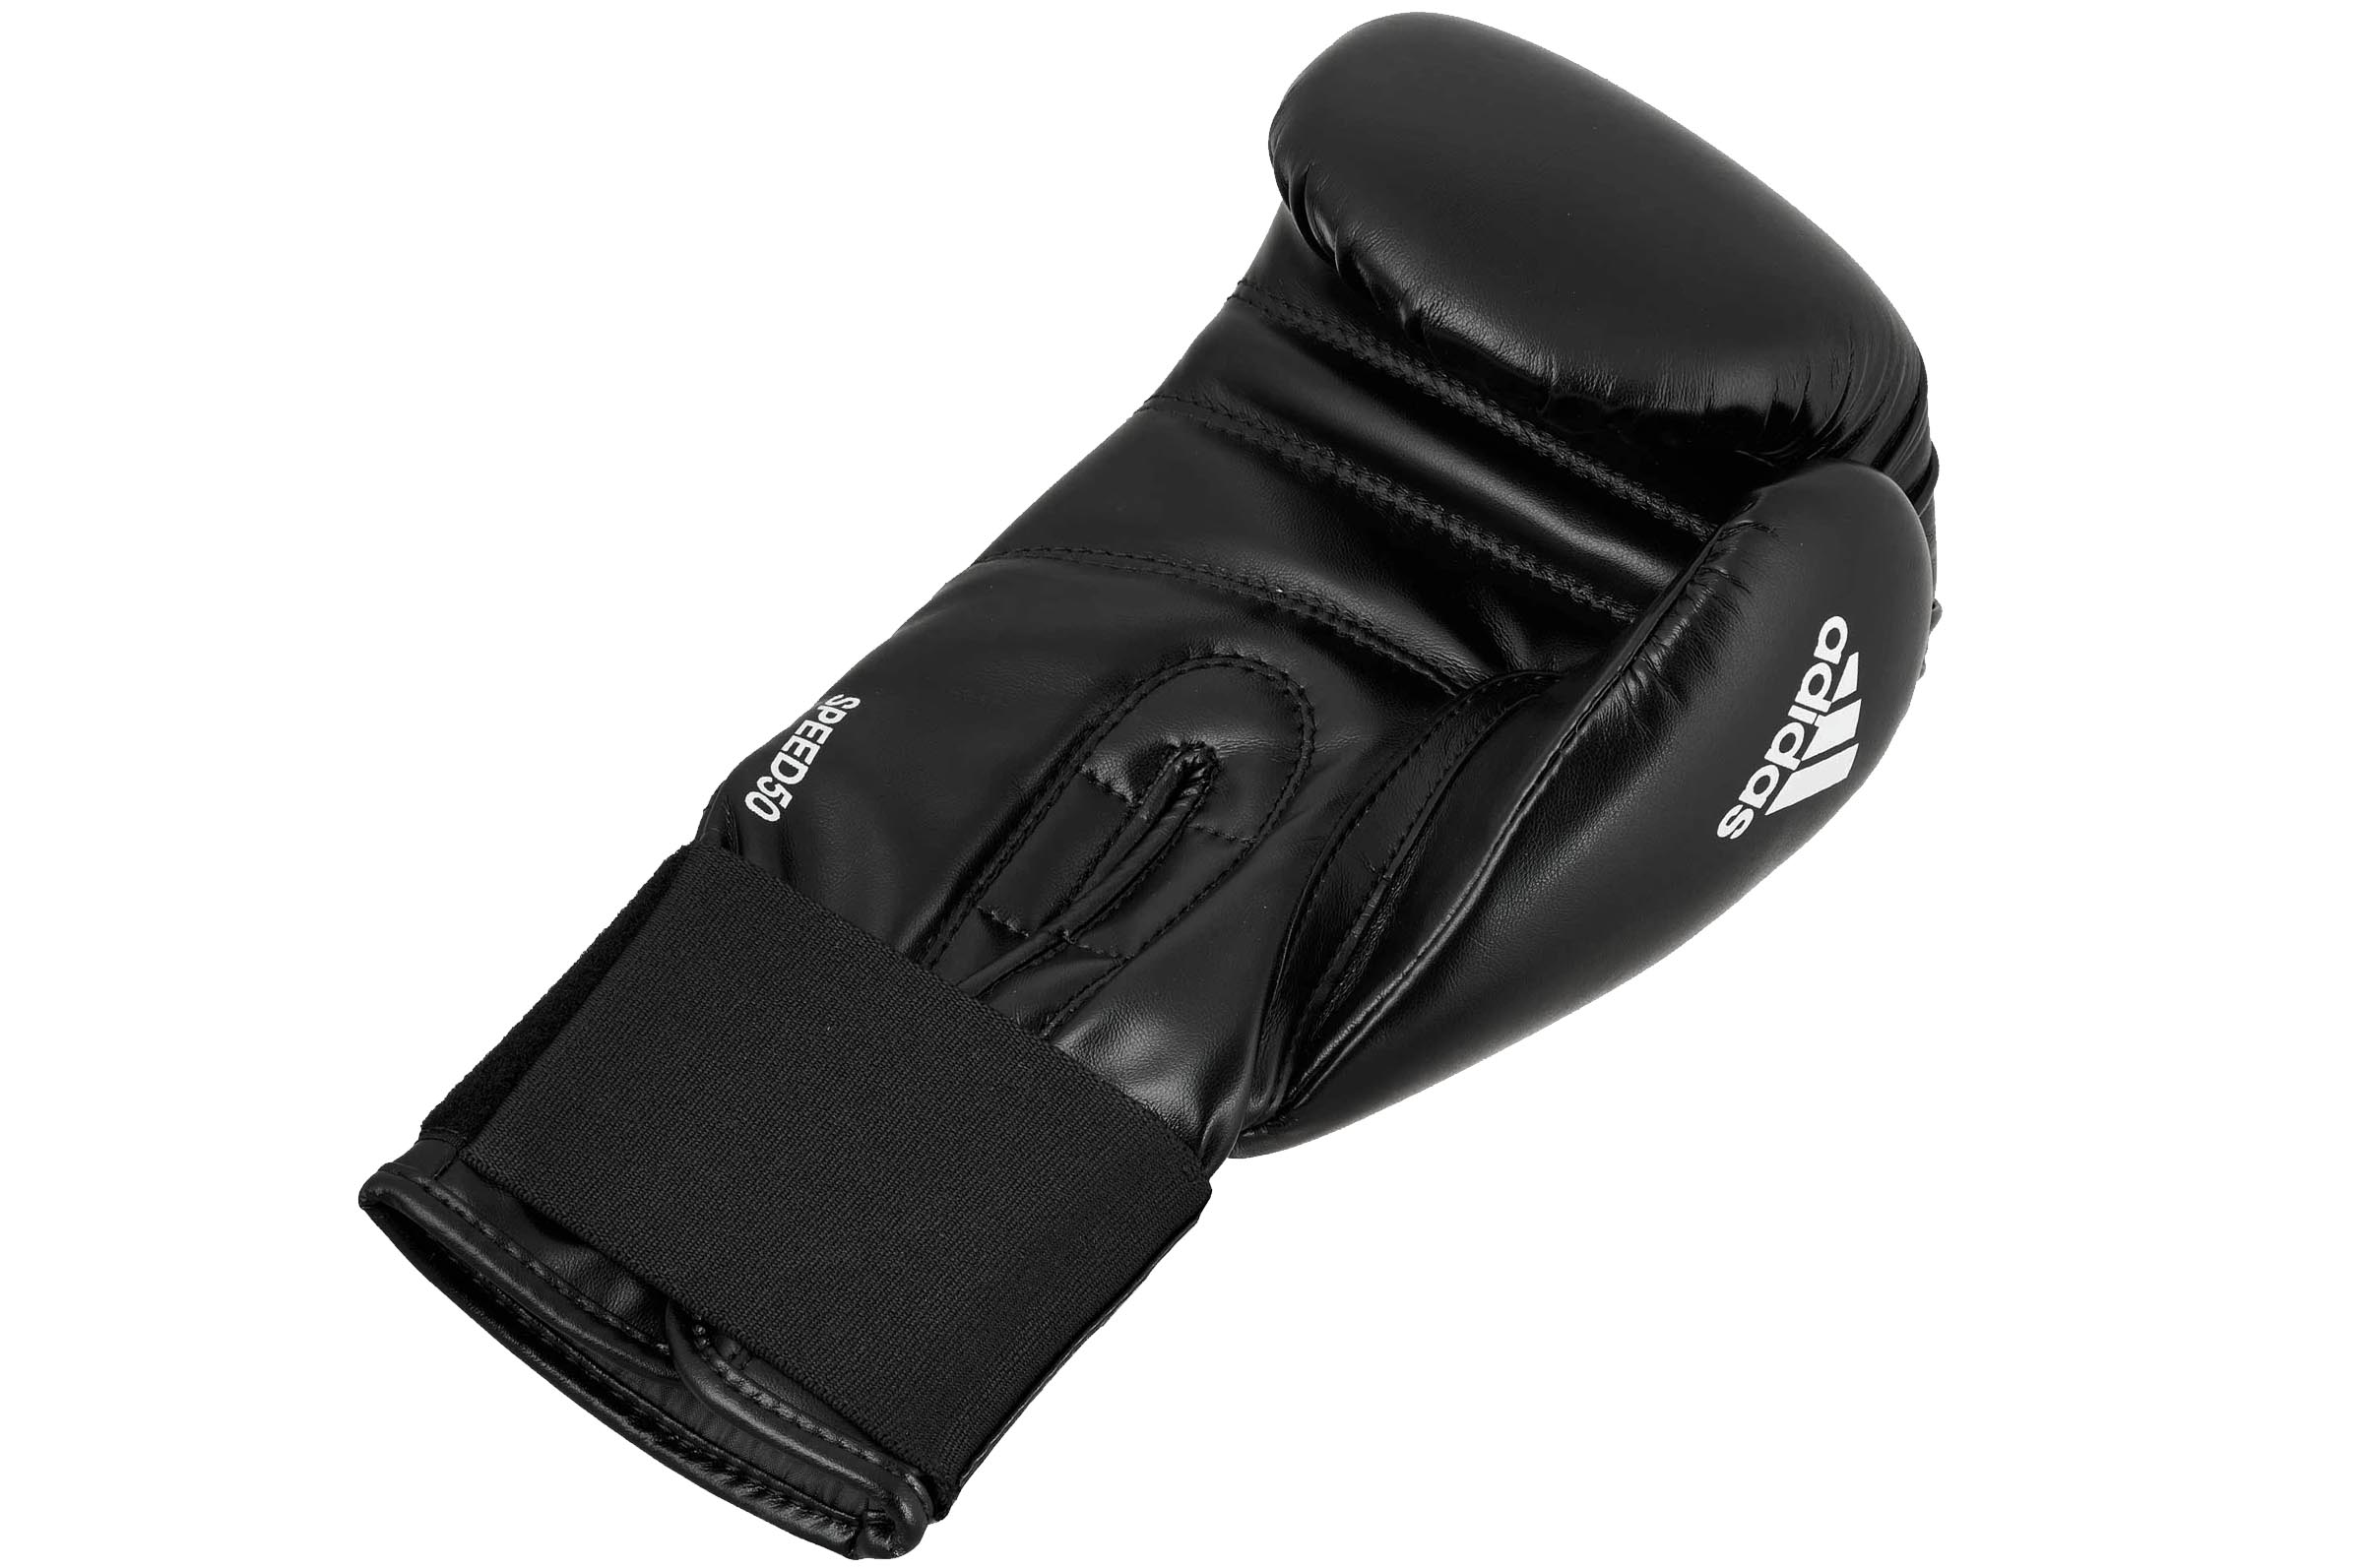 Kit de boxe bandes+gants+protège-dents blanc/noir - Adidas